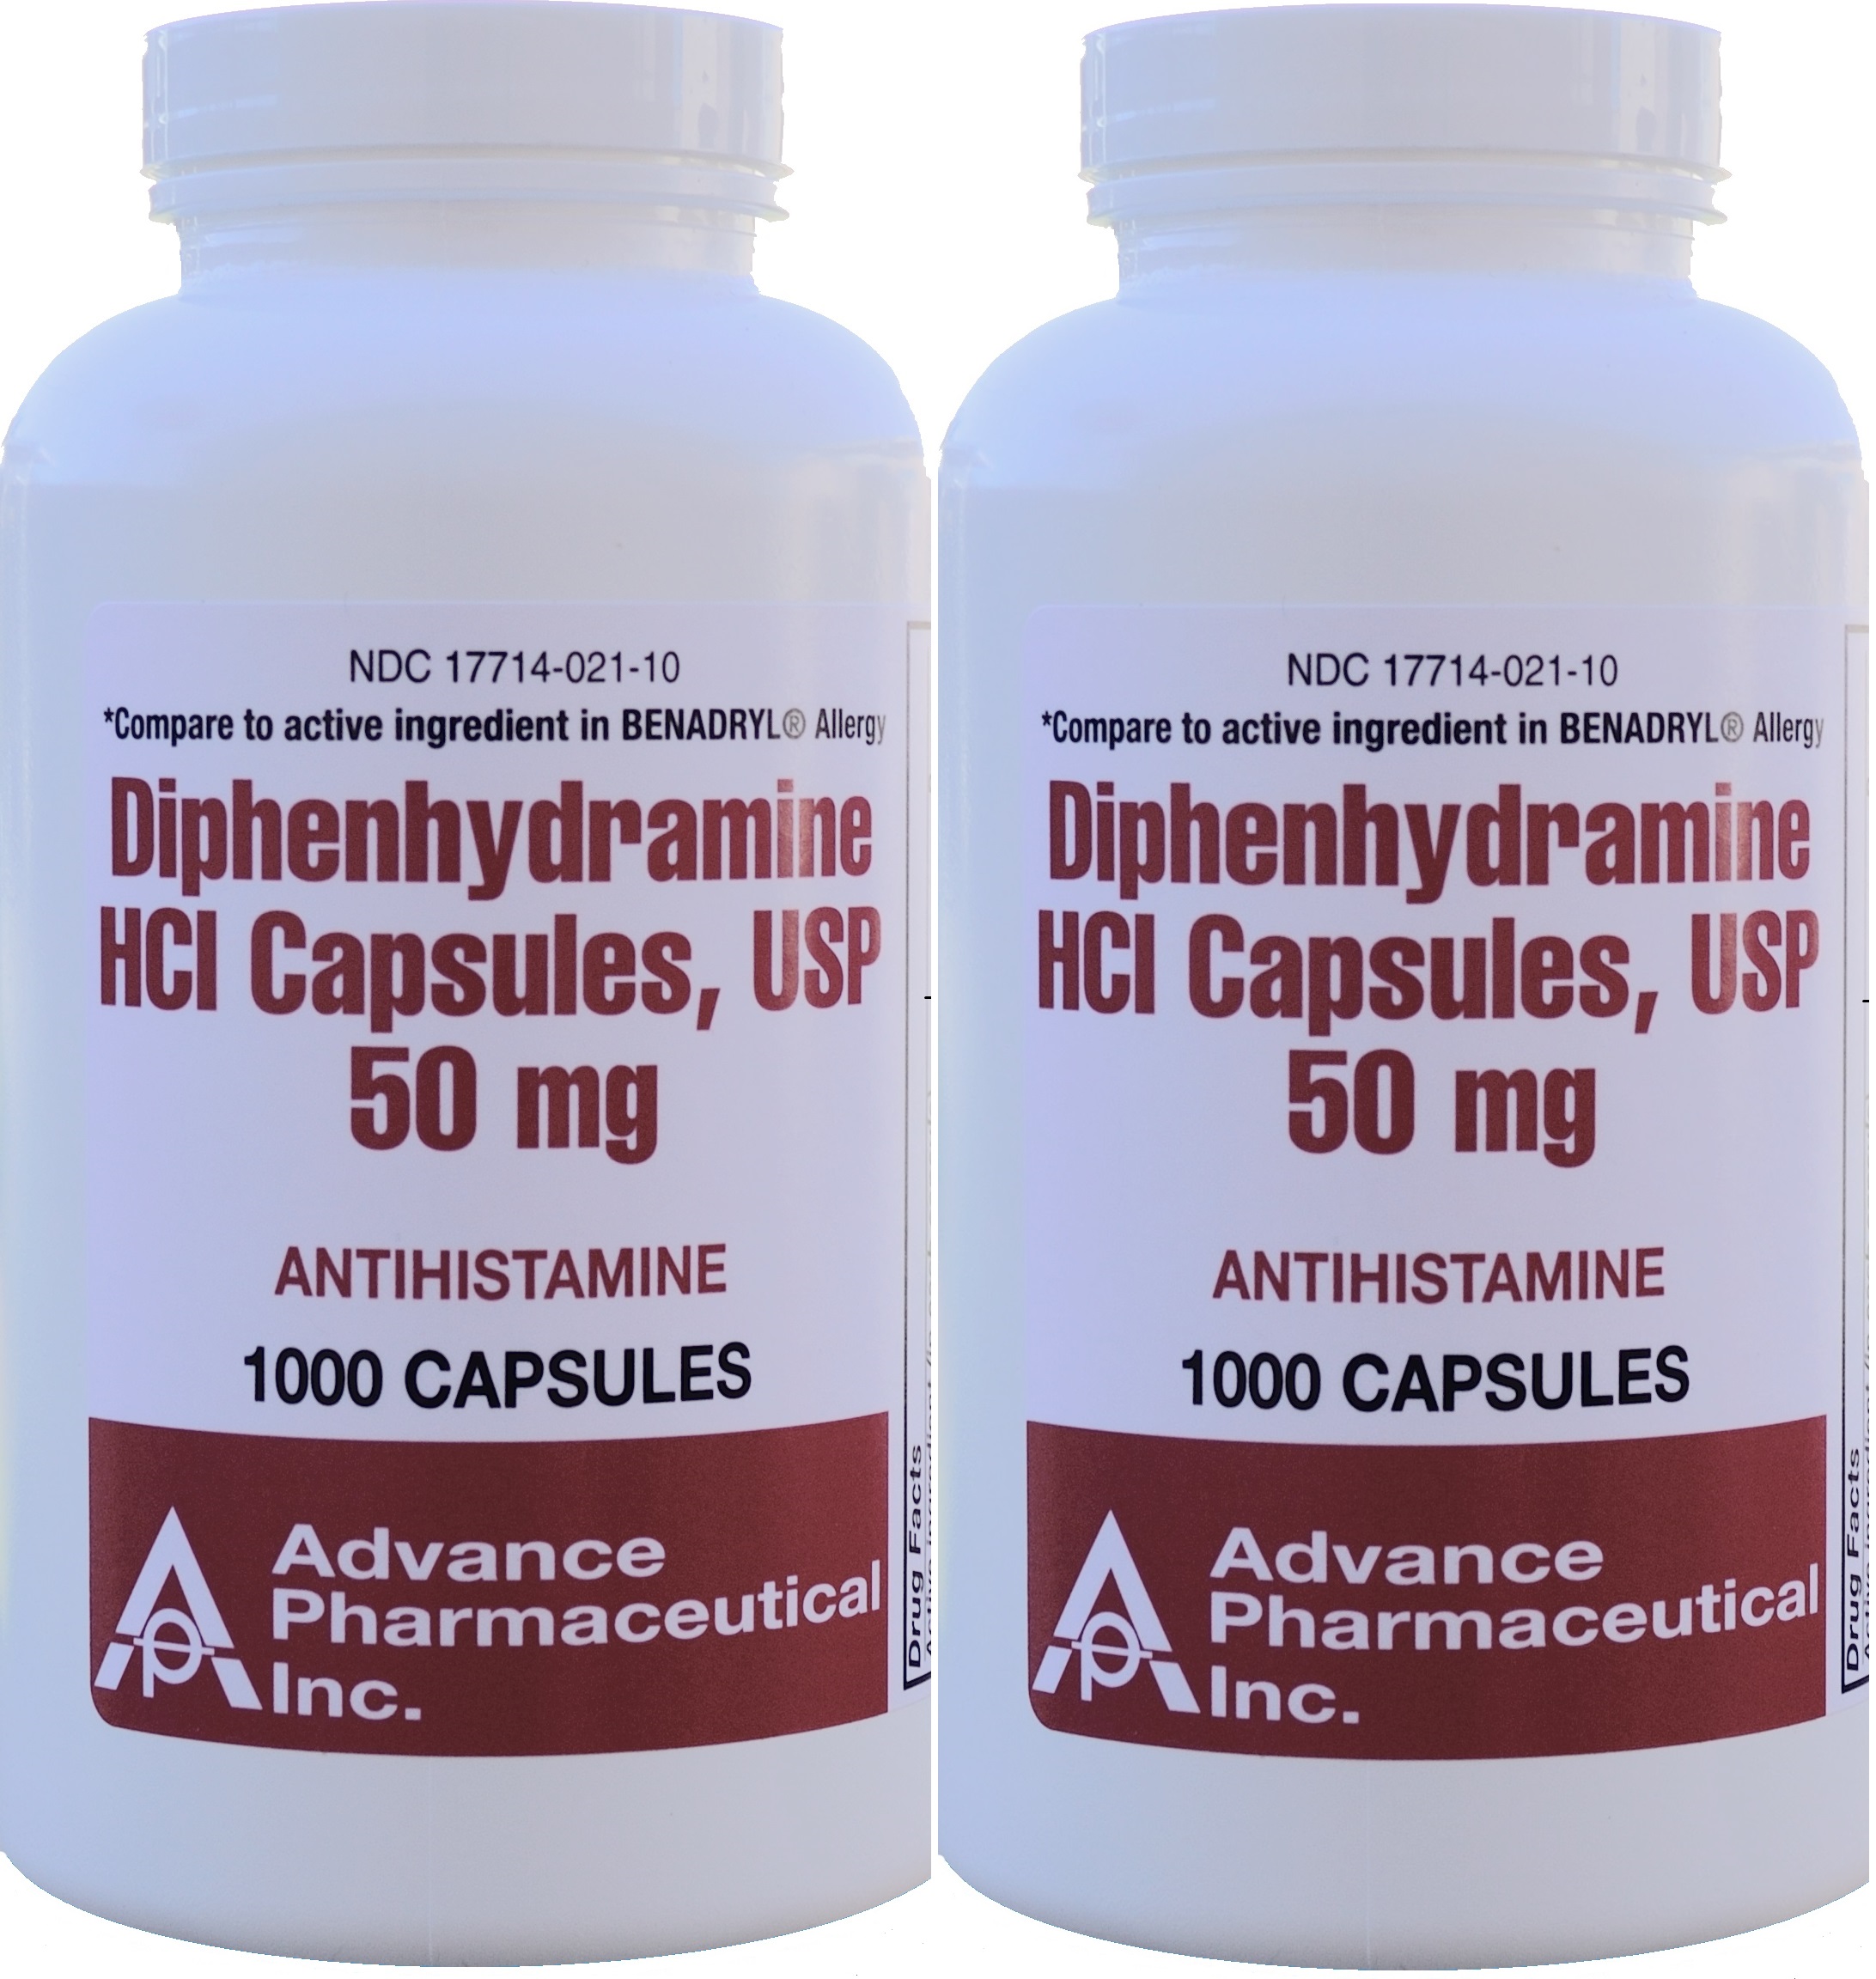 Diphenhydramine 50 mg Generic Benadryl Allergy Medicine and Antihistamine 1000 Capsules per Bottle PACK of 2 - image 1 of 4